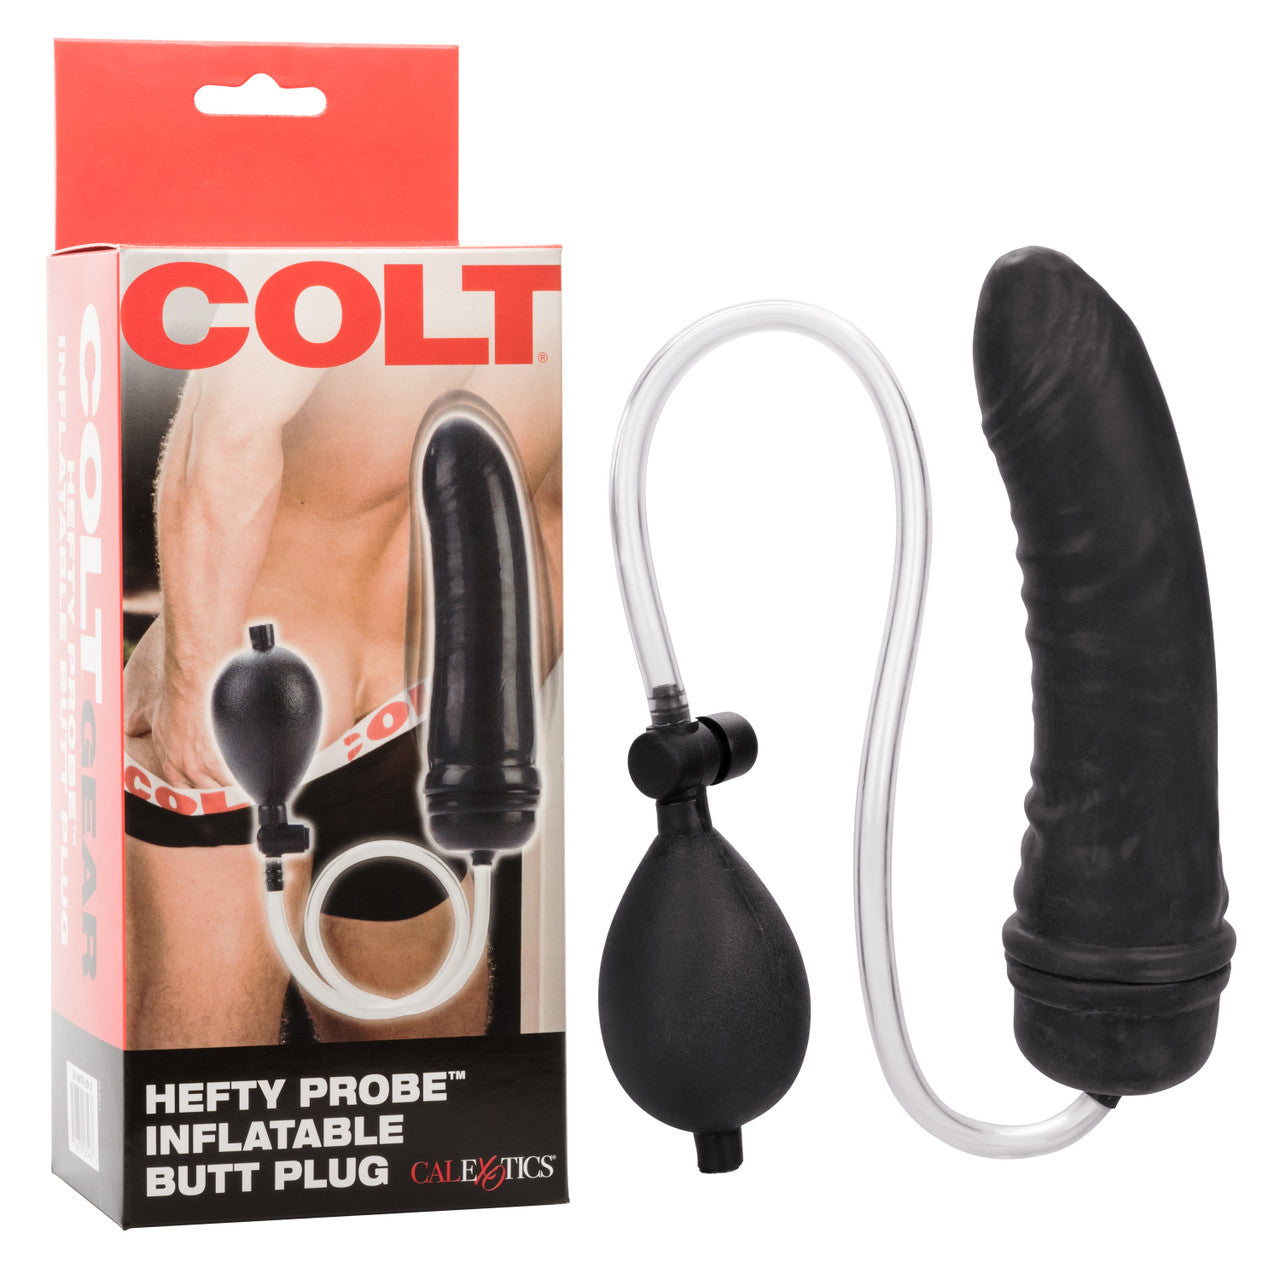 COLT Heavy Probe Inflatable Butt Plug